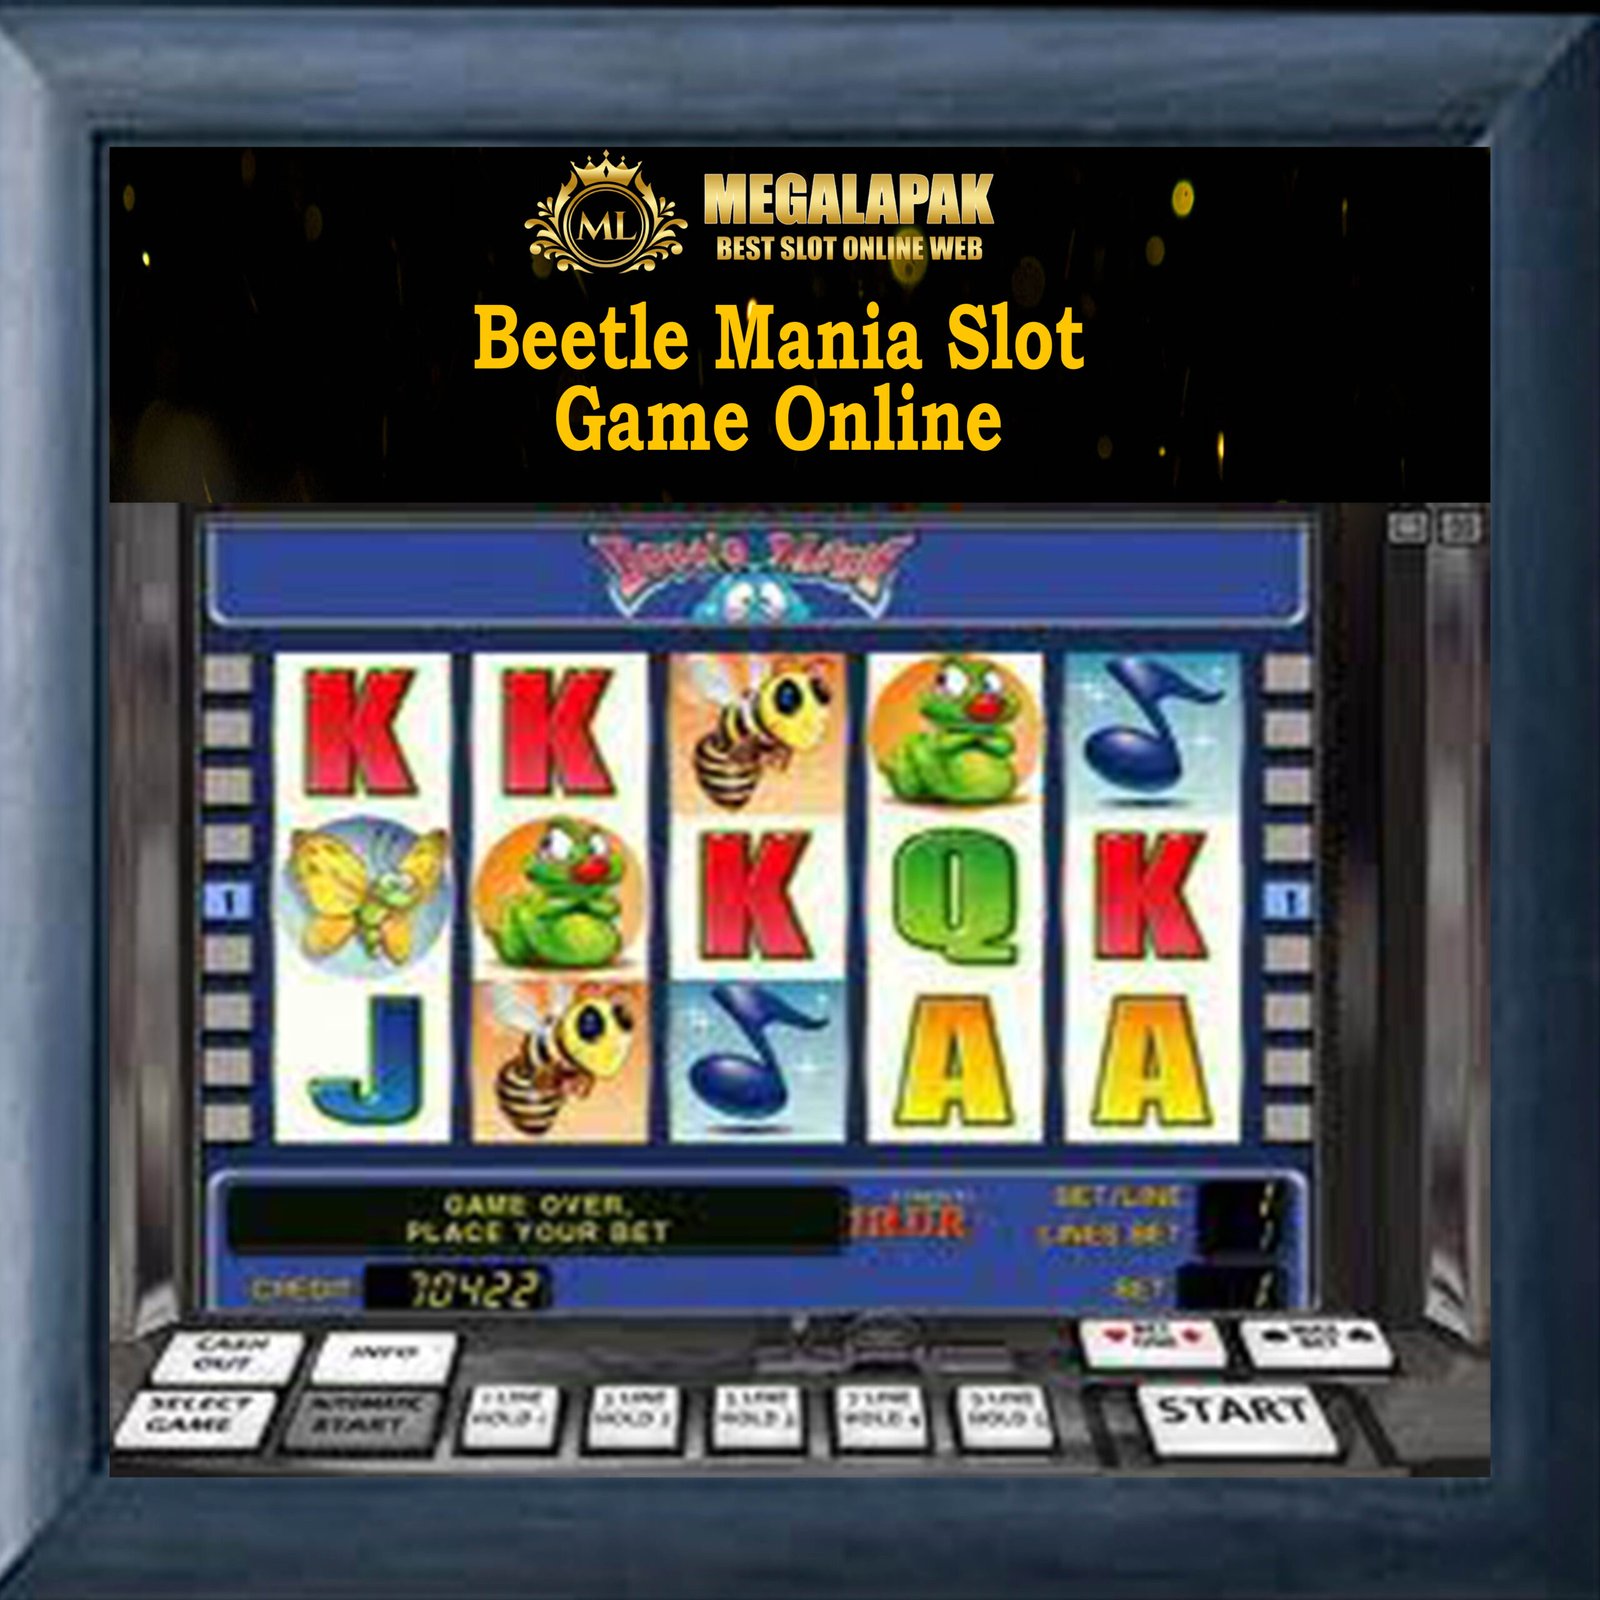 Beetle Mania Slot Game Megalapak